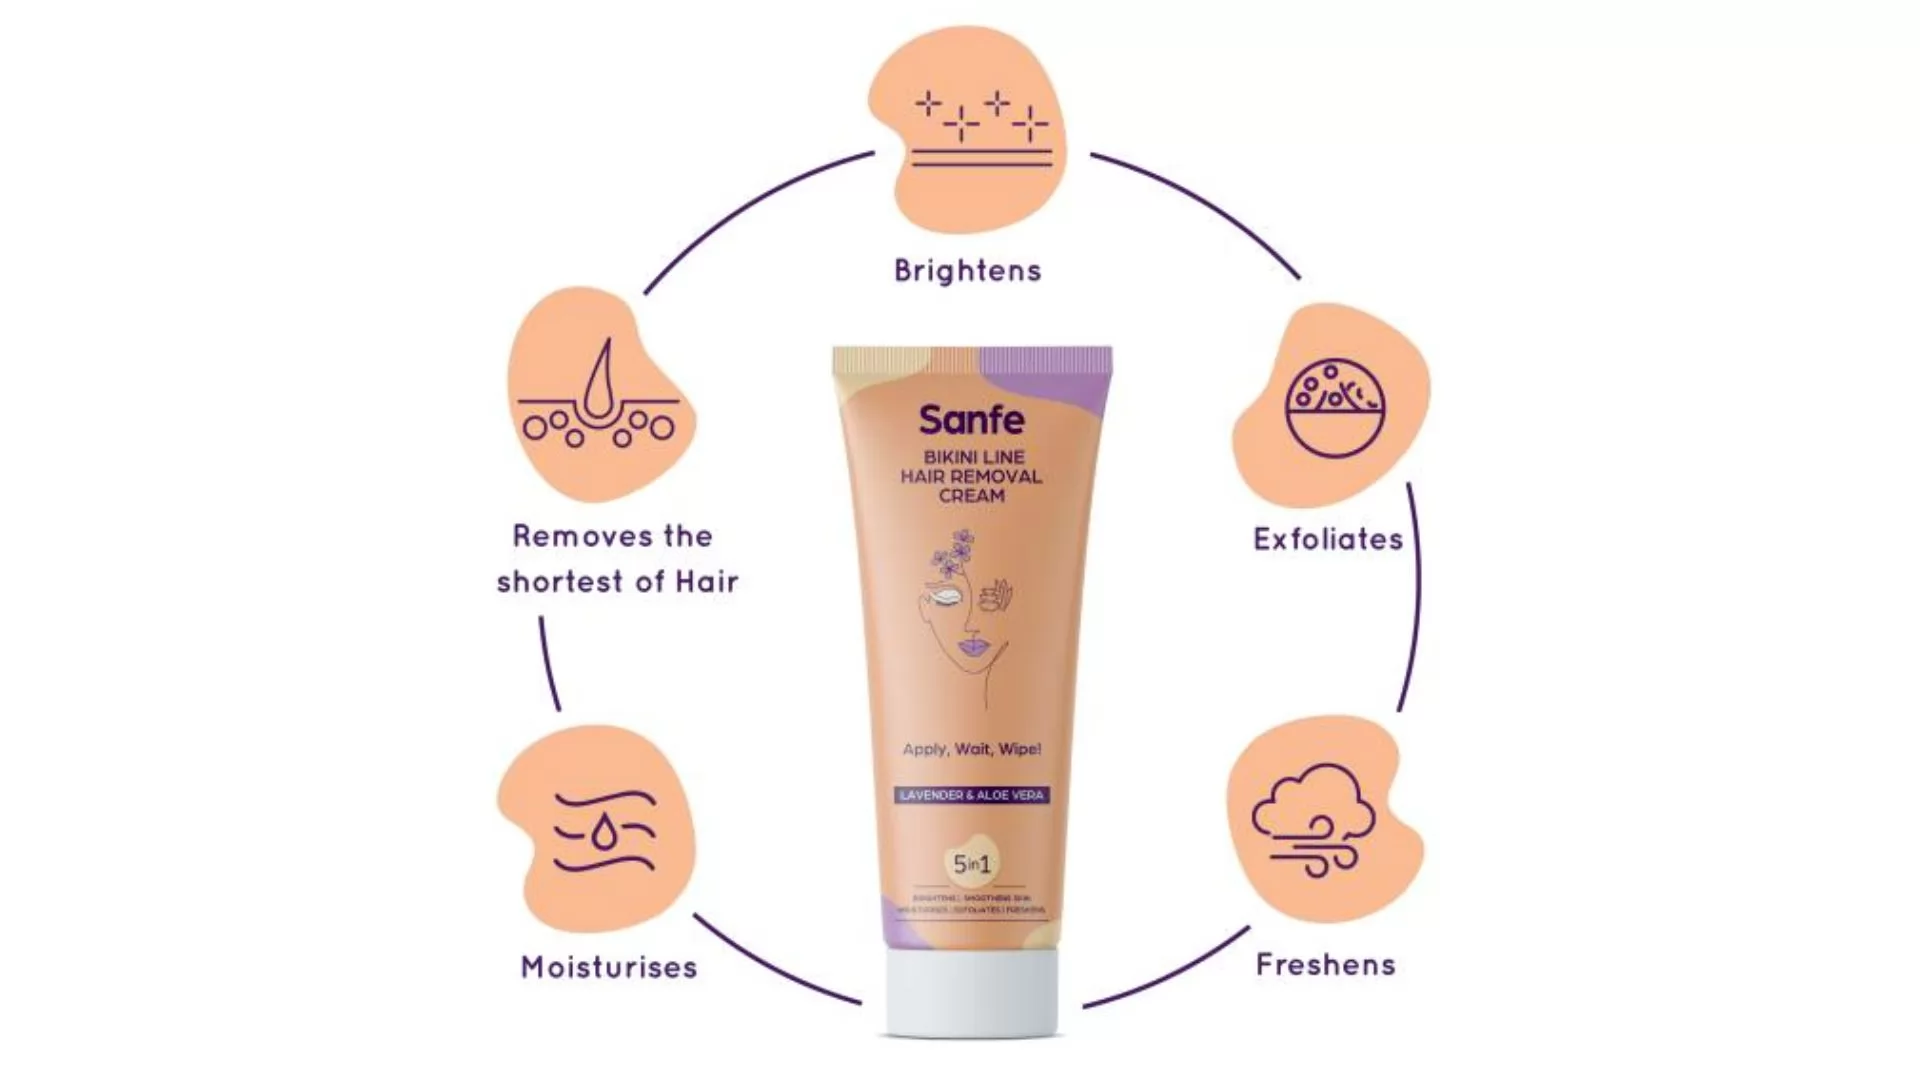  Sanfe hair removal cream